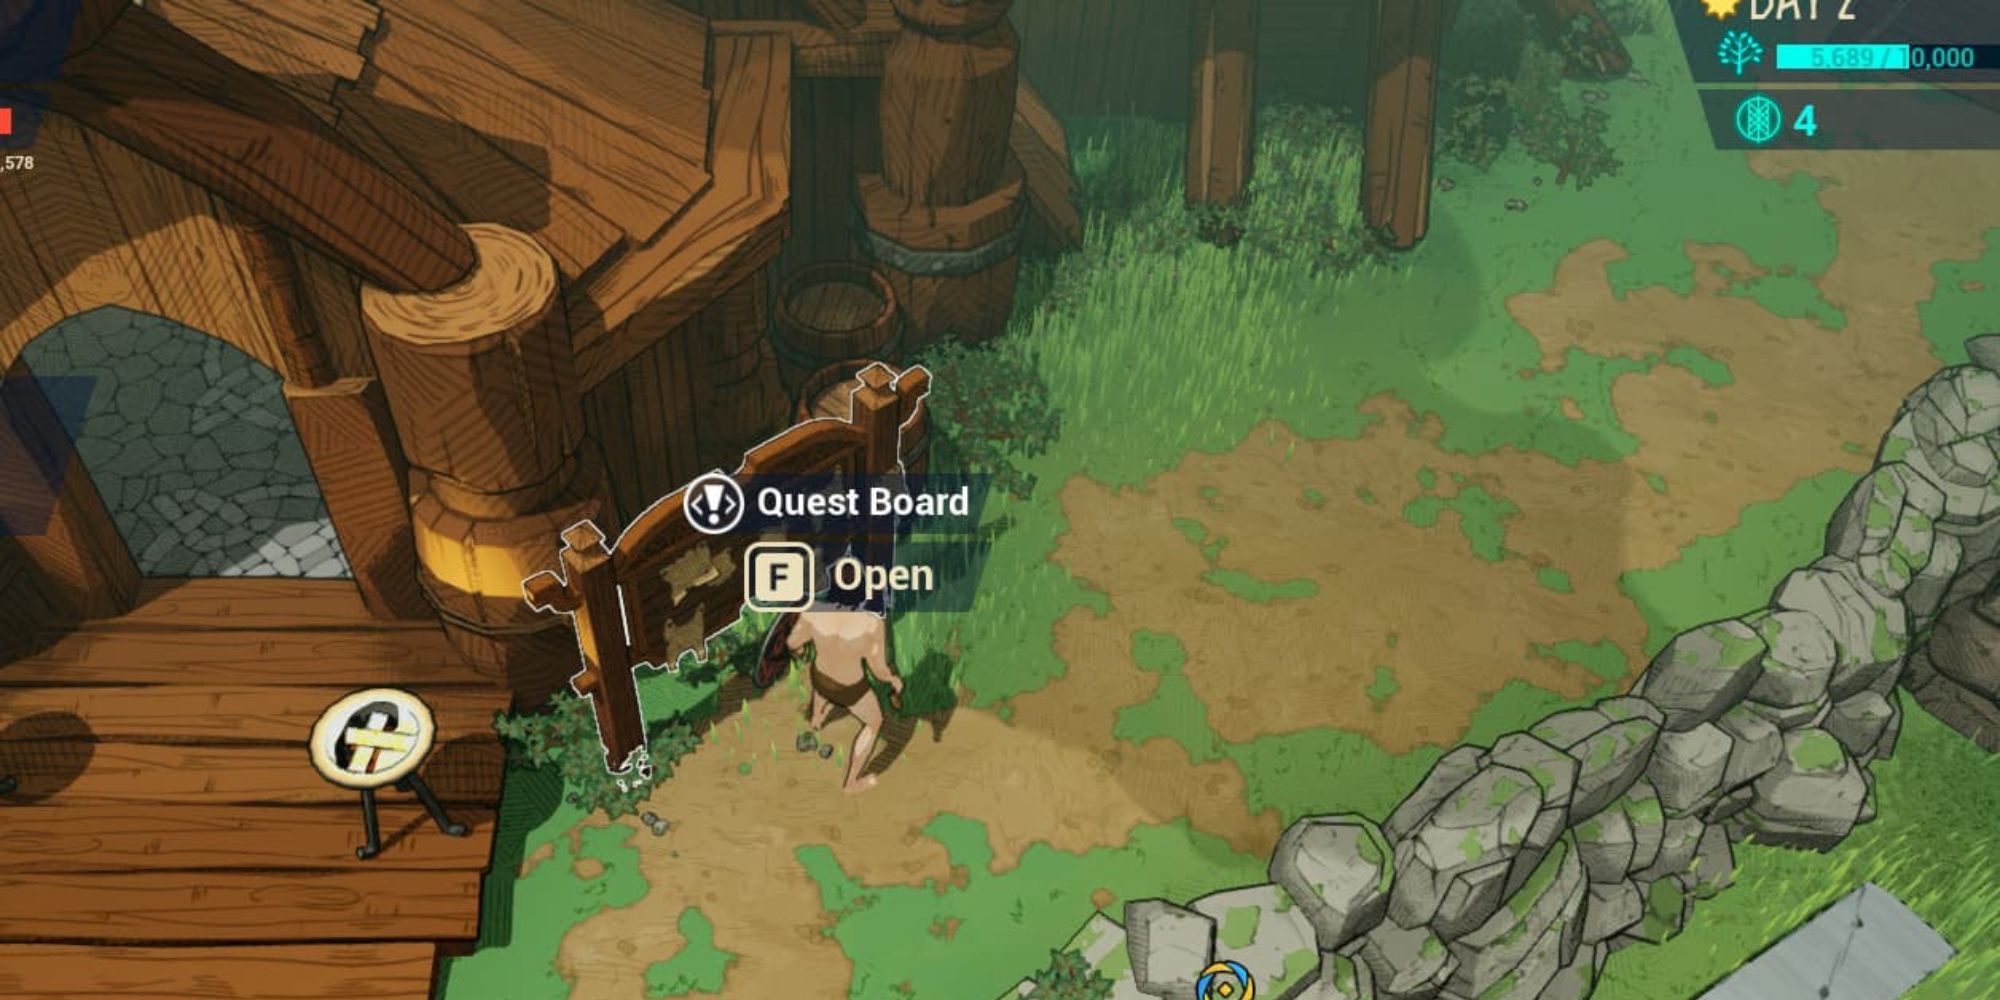 Use The Quest Board